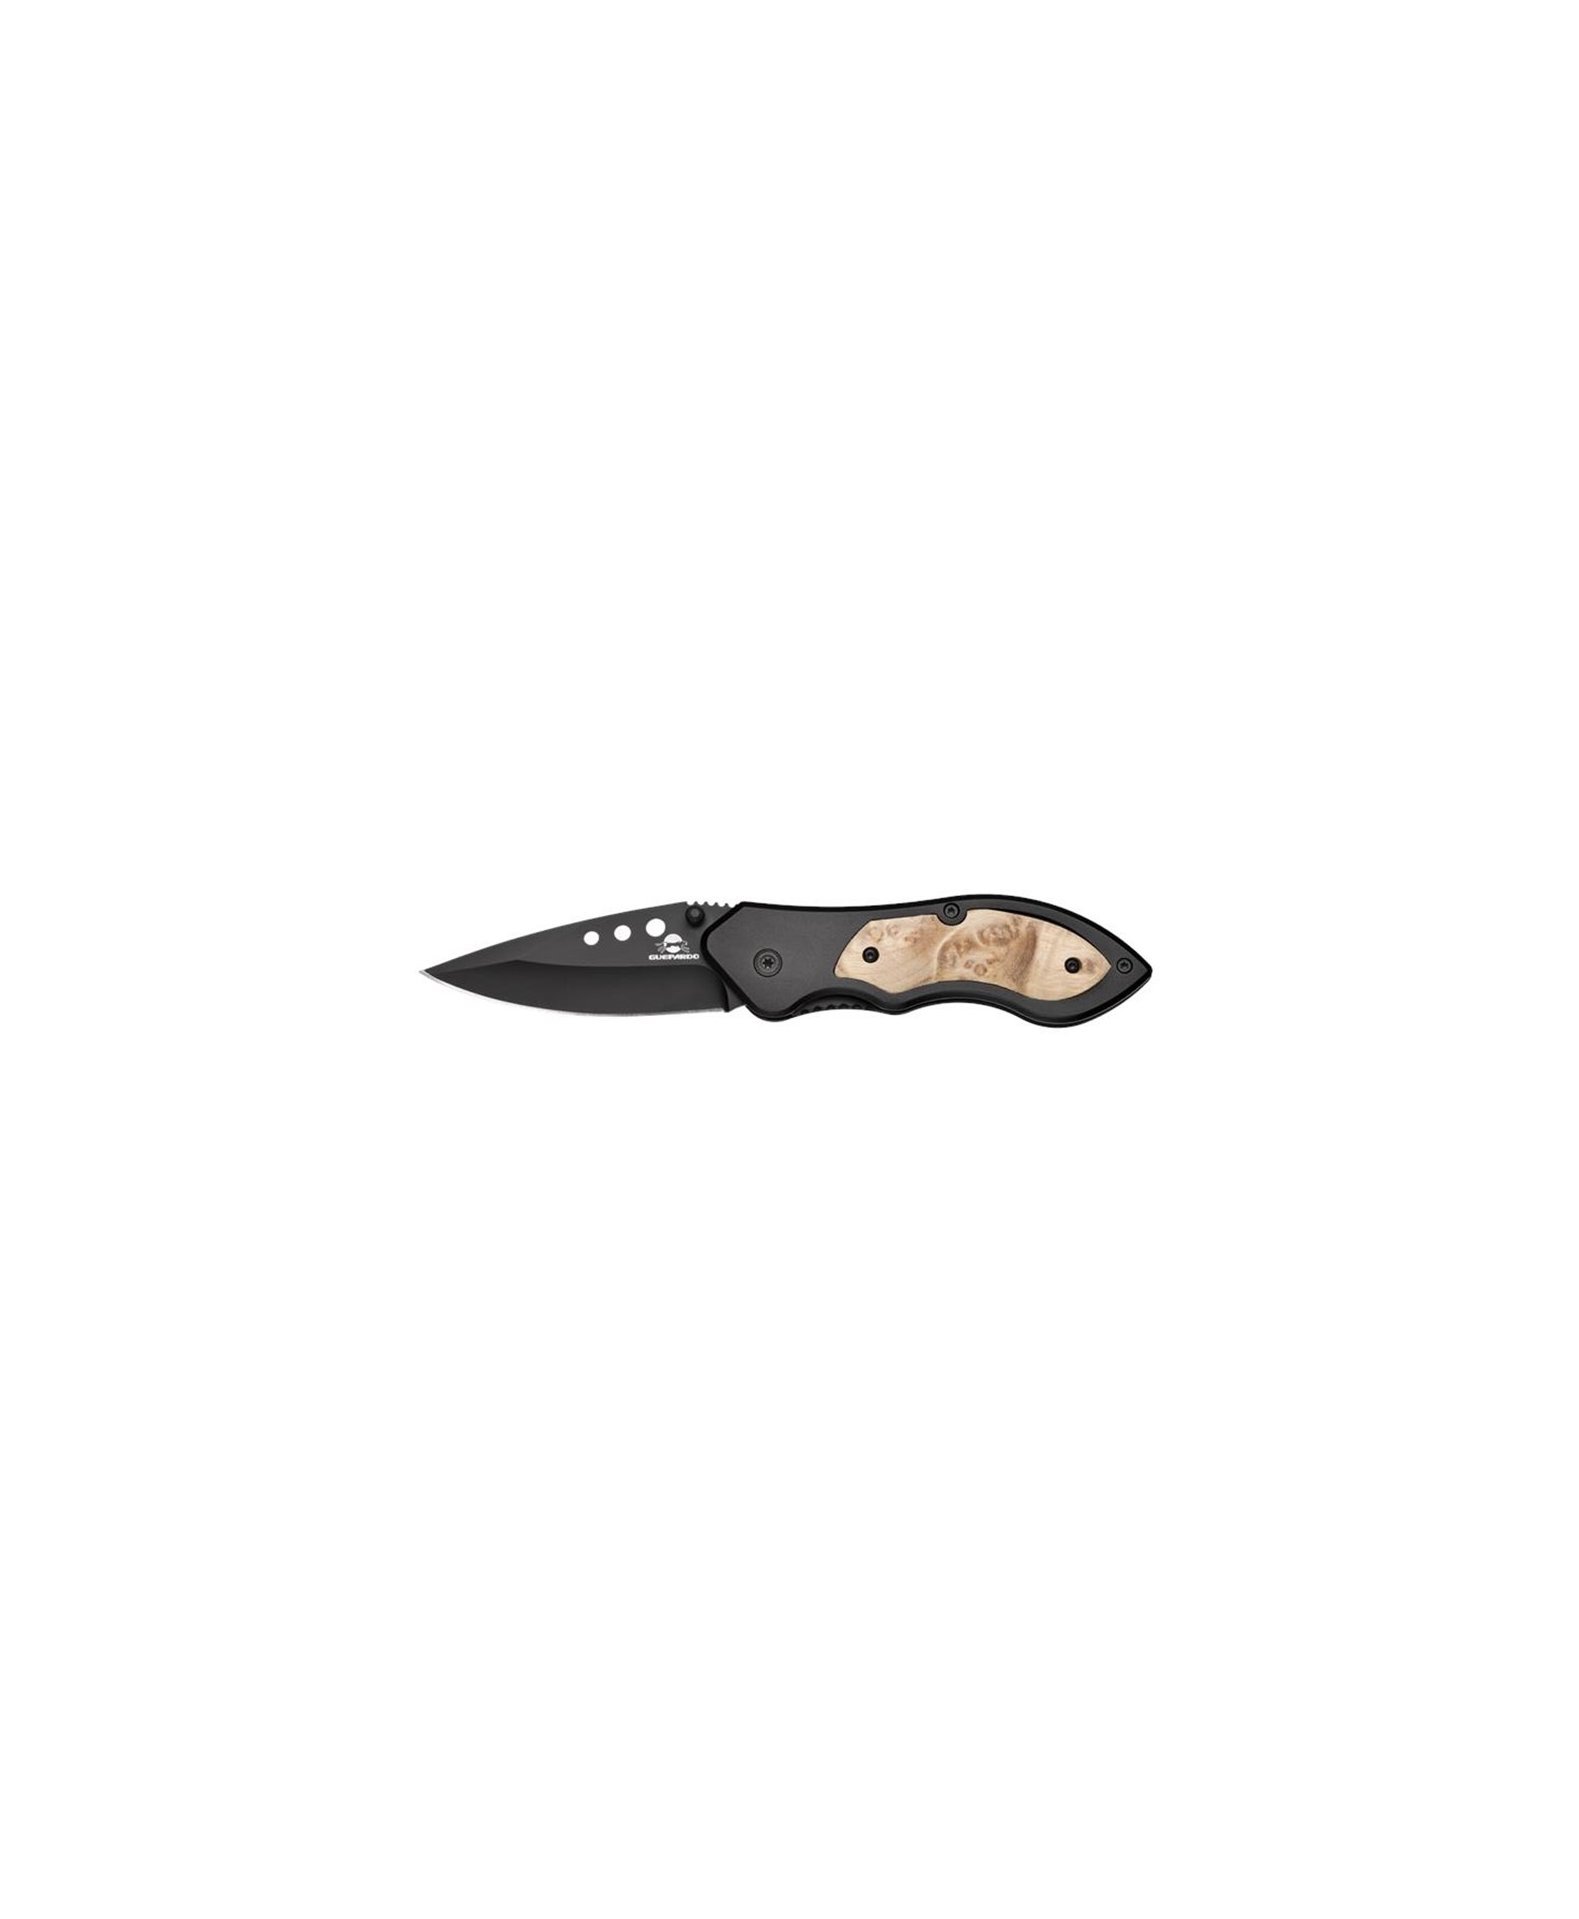 Canivete Black Tool - Guepardo